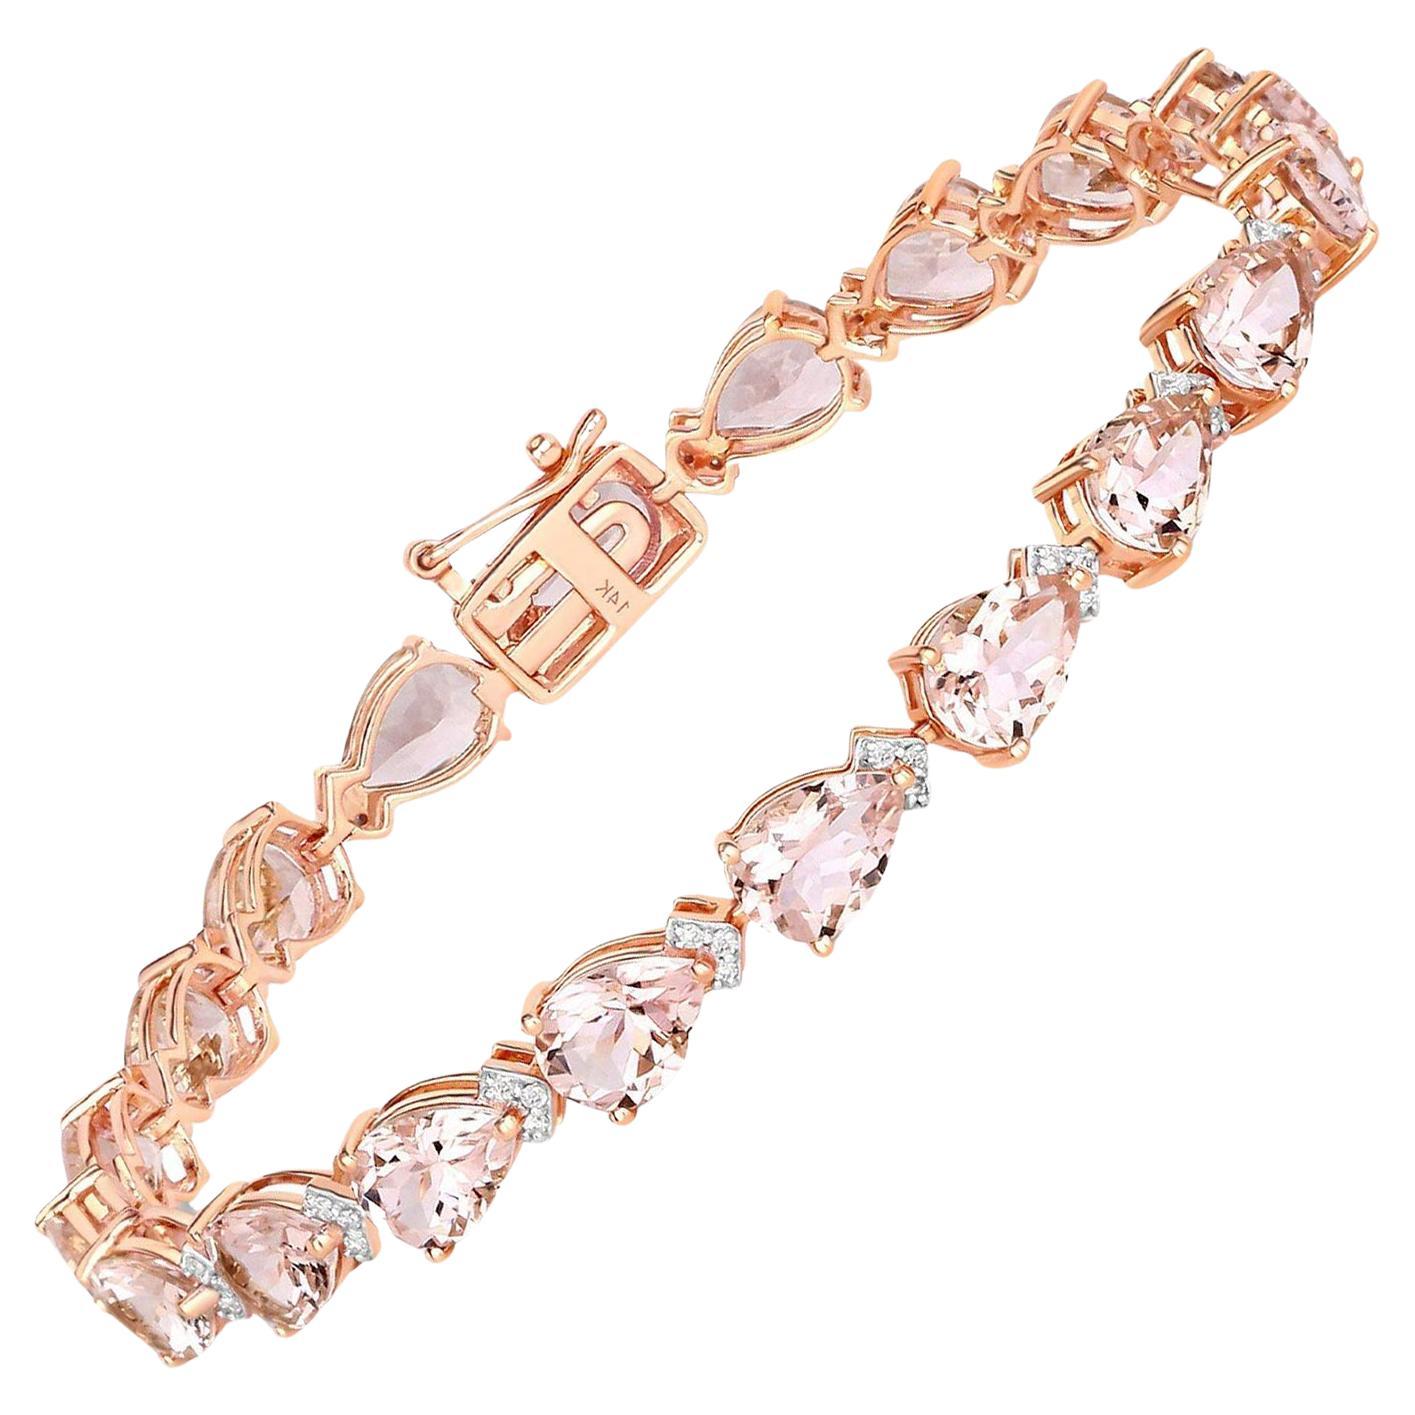 Pink Pear Cut Morganite Tennis Bracelet Diamond Links 11.2 Carats 14K Rose Gold